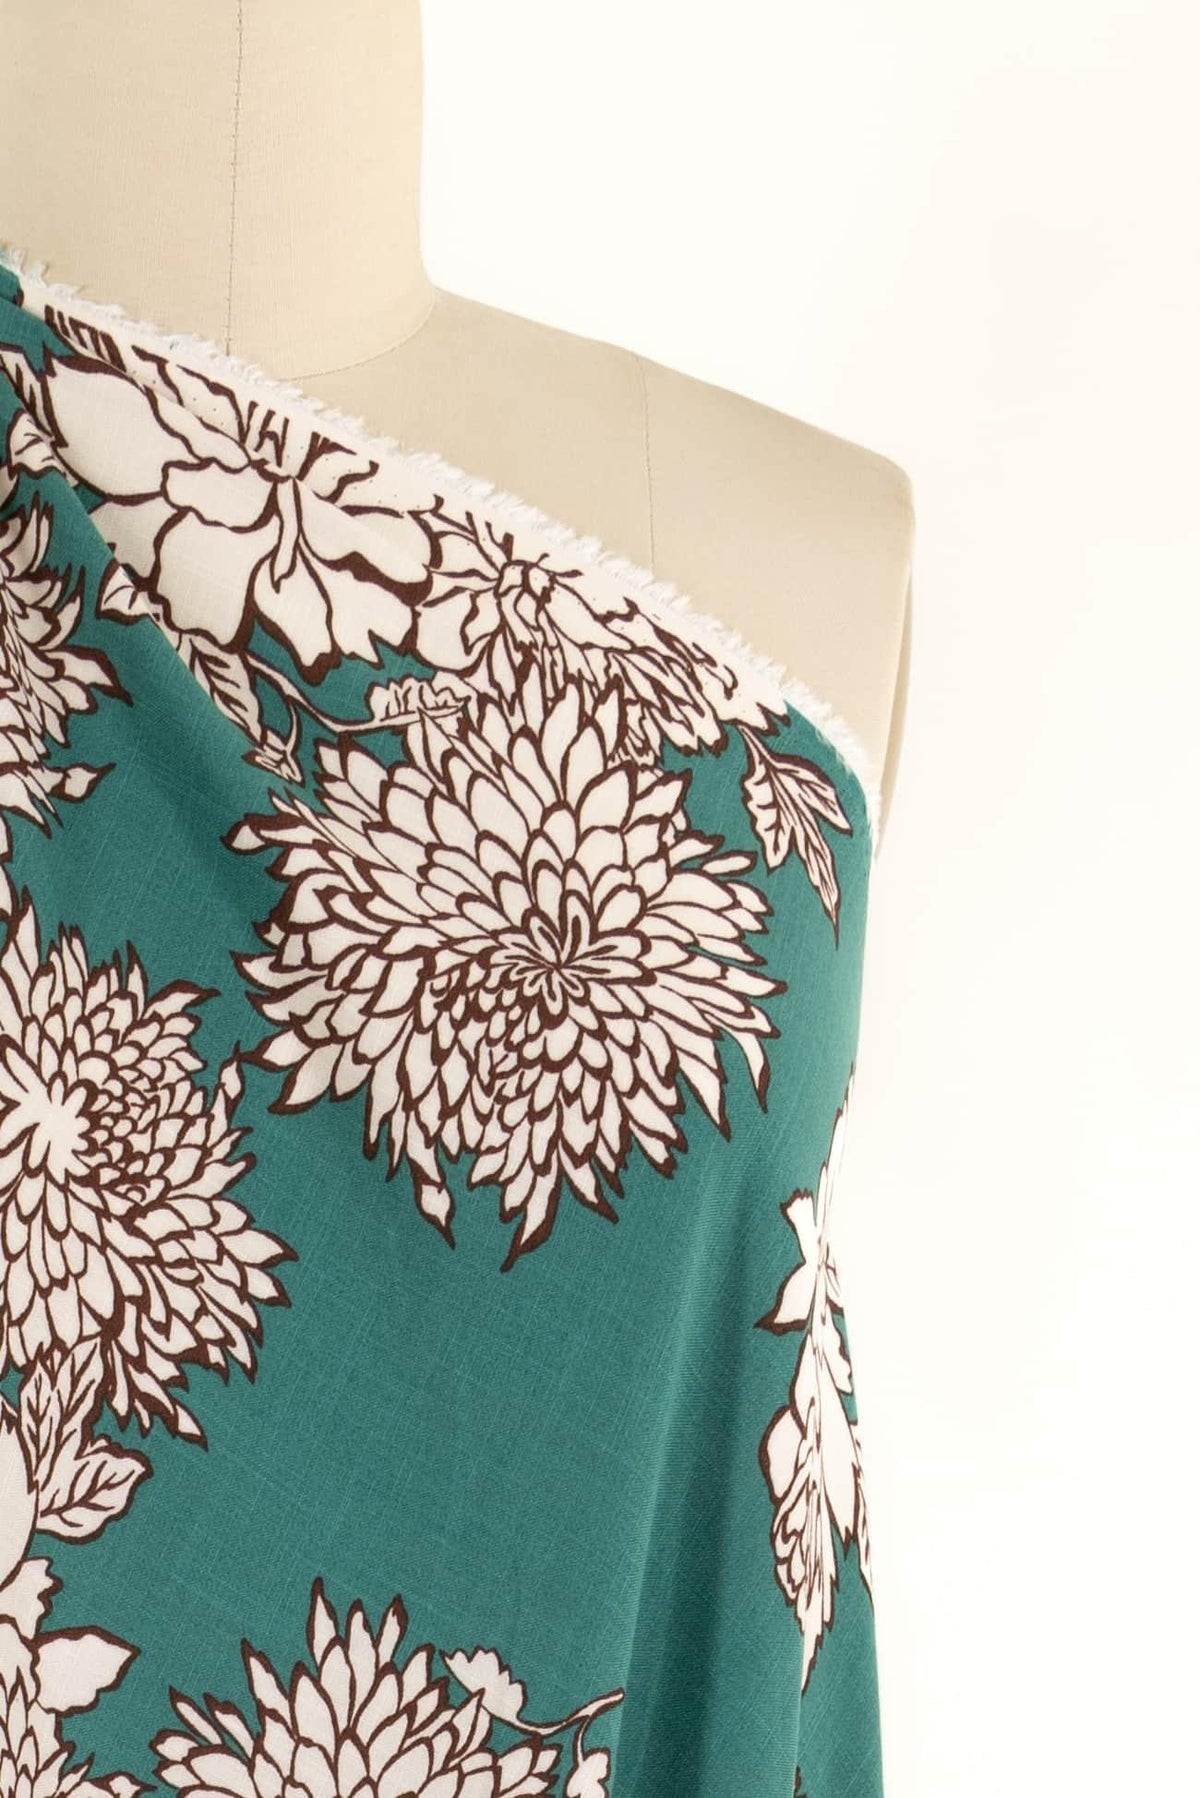 Teal Mums Floral Woven - Marcy Tilton Fabrics